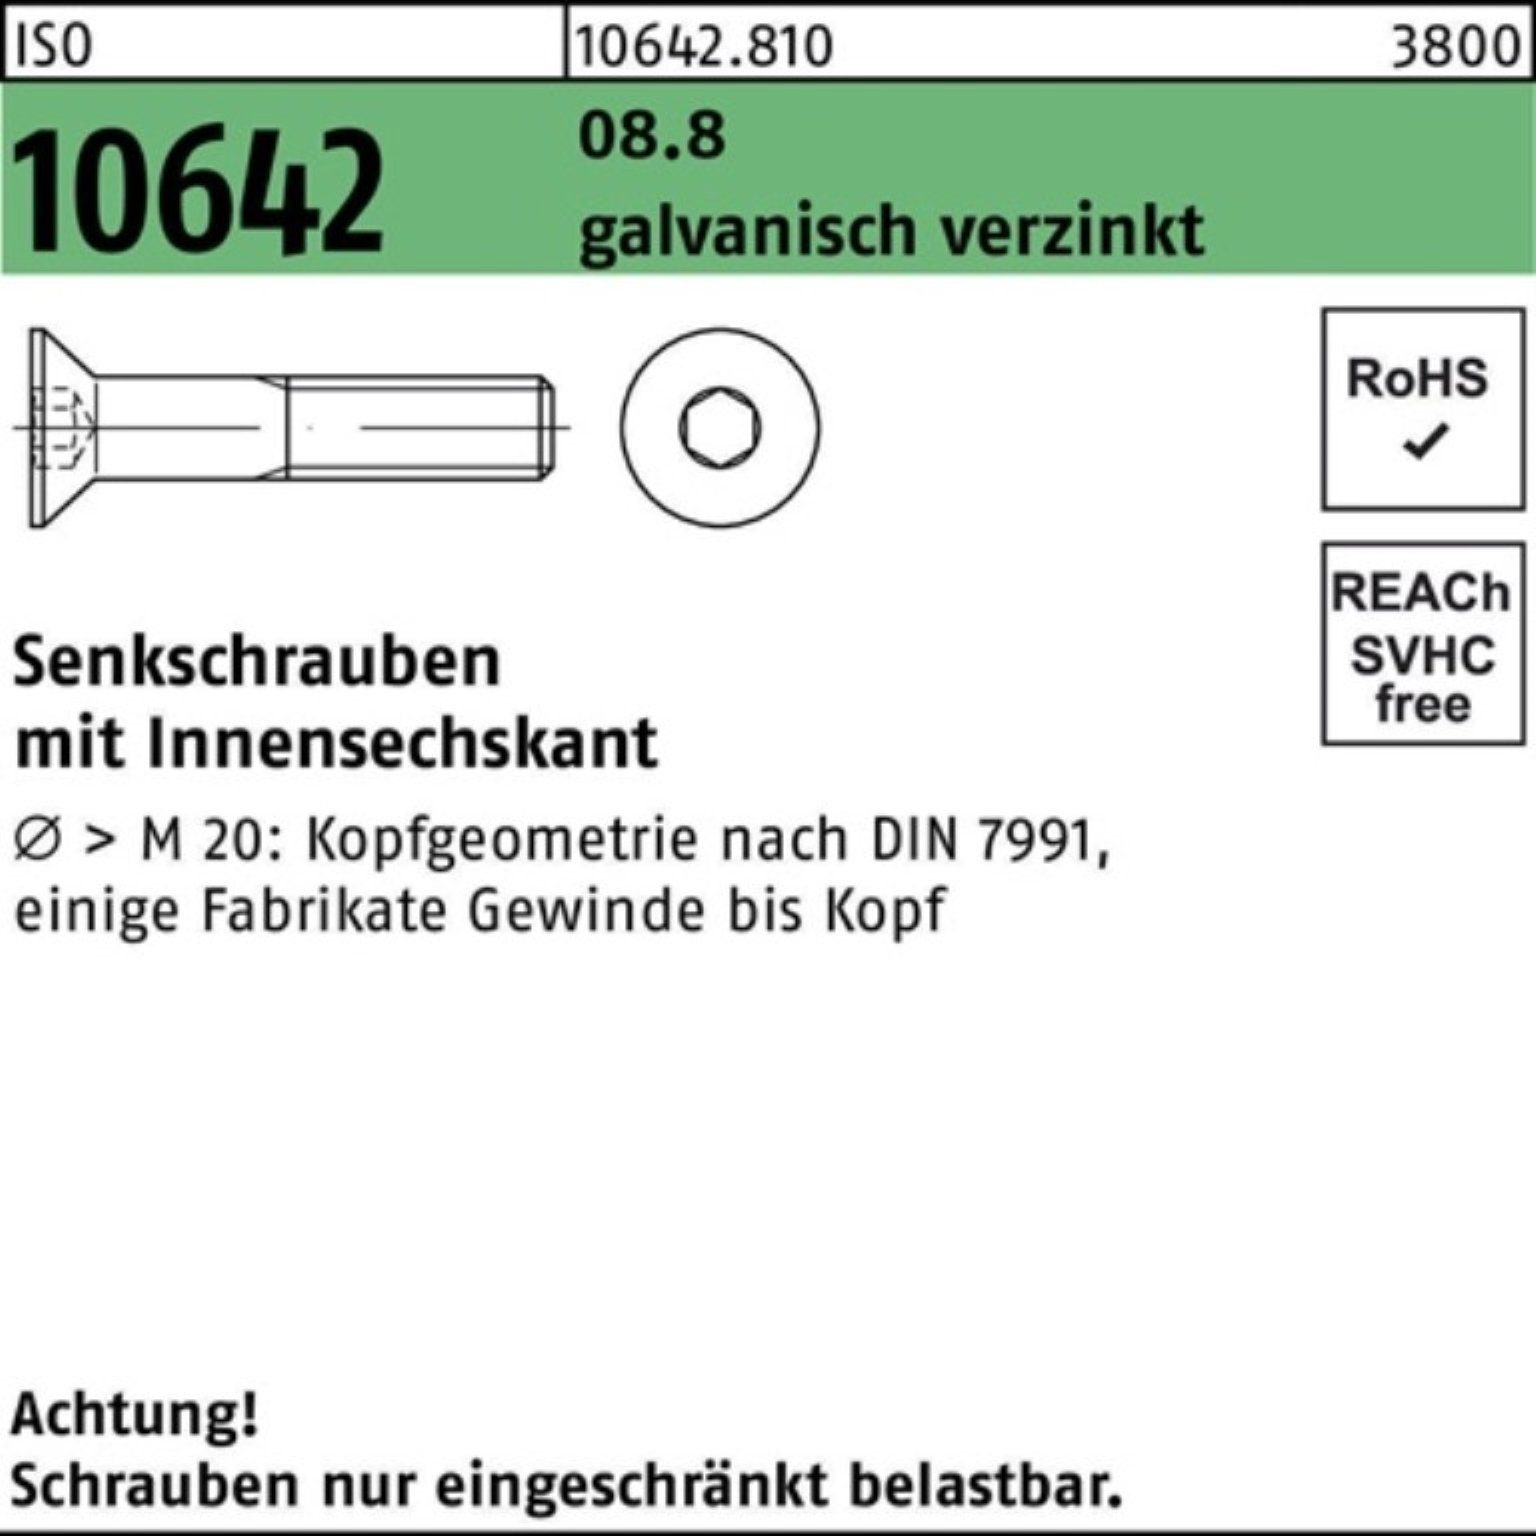 galv.verz. M6x Pack 10642 Reyher 200 65 ISO 8.8 Senkschraube Innen-6kt Senkschraube 200er